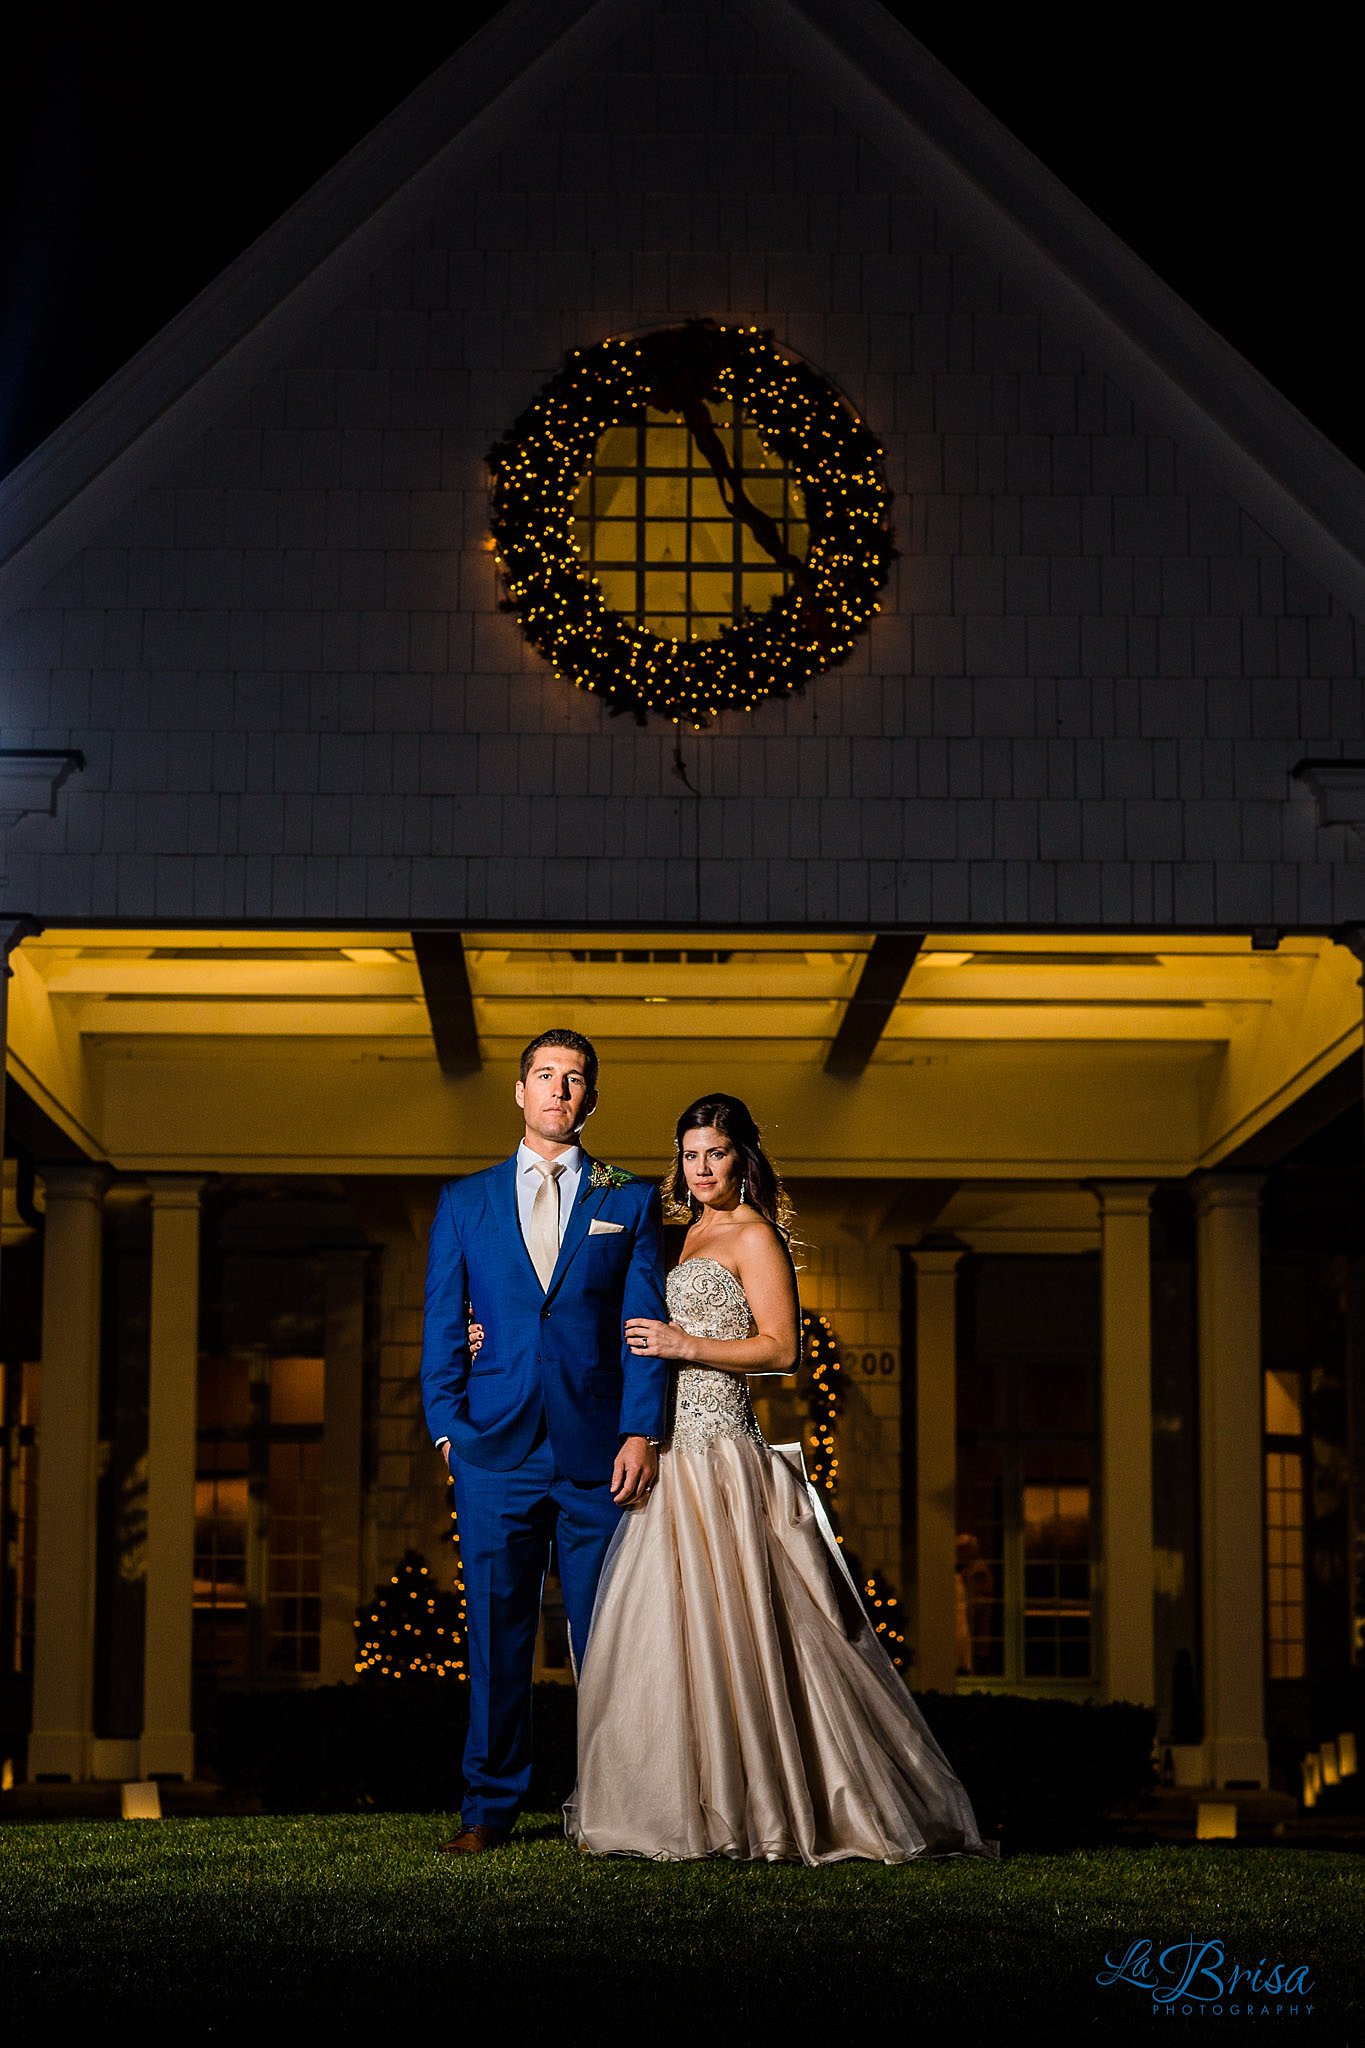 Whitney & Neil | Wedding Photography Preview | Kansas City, MO | Chris Hsieh